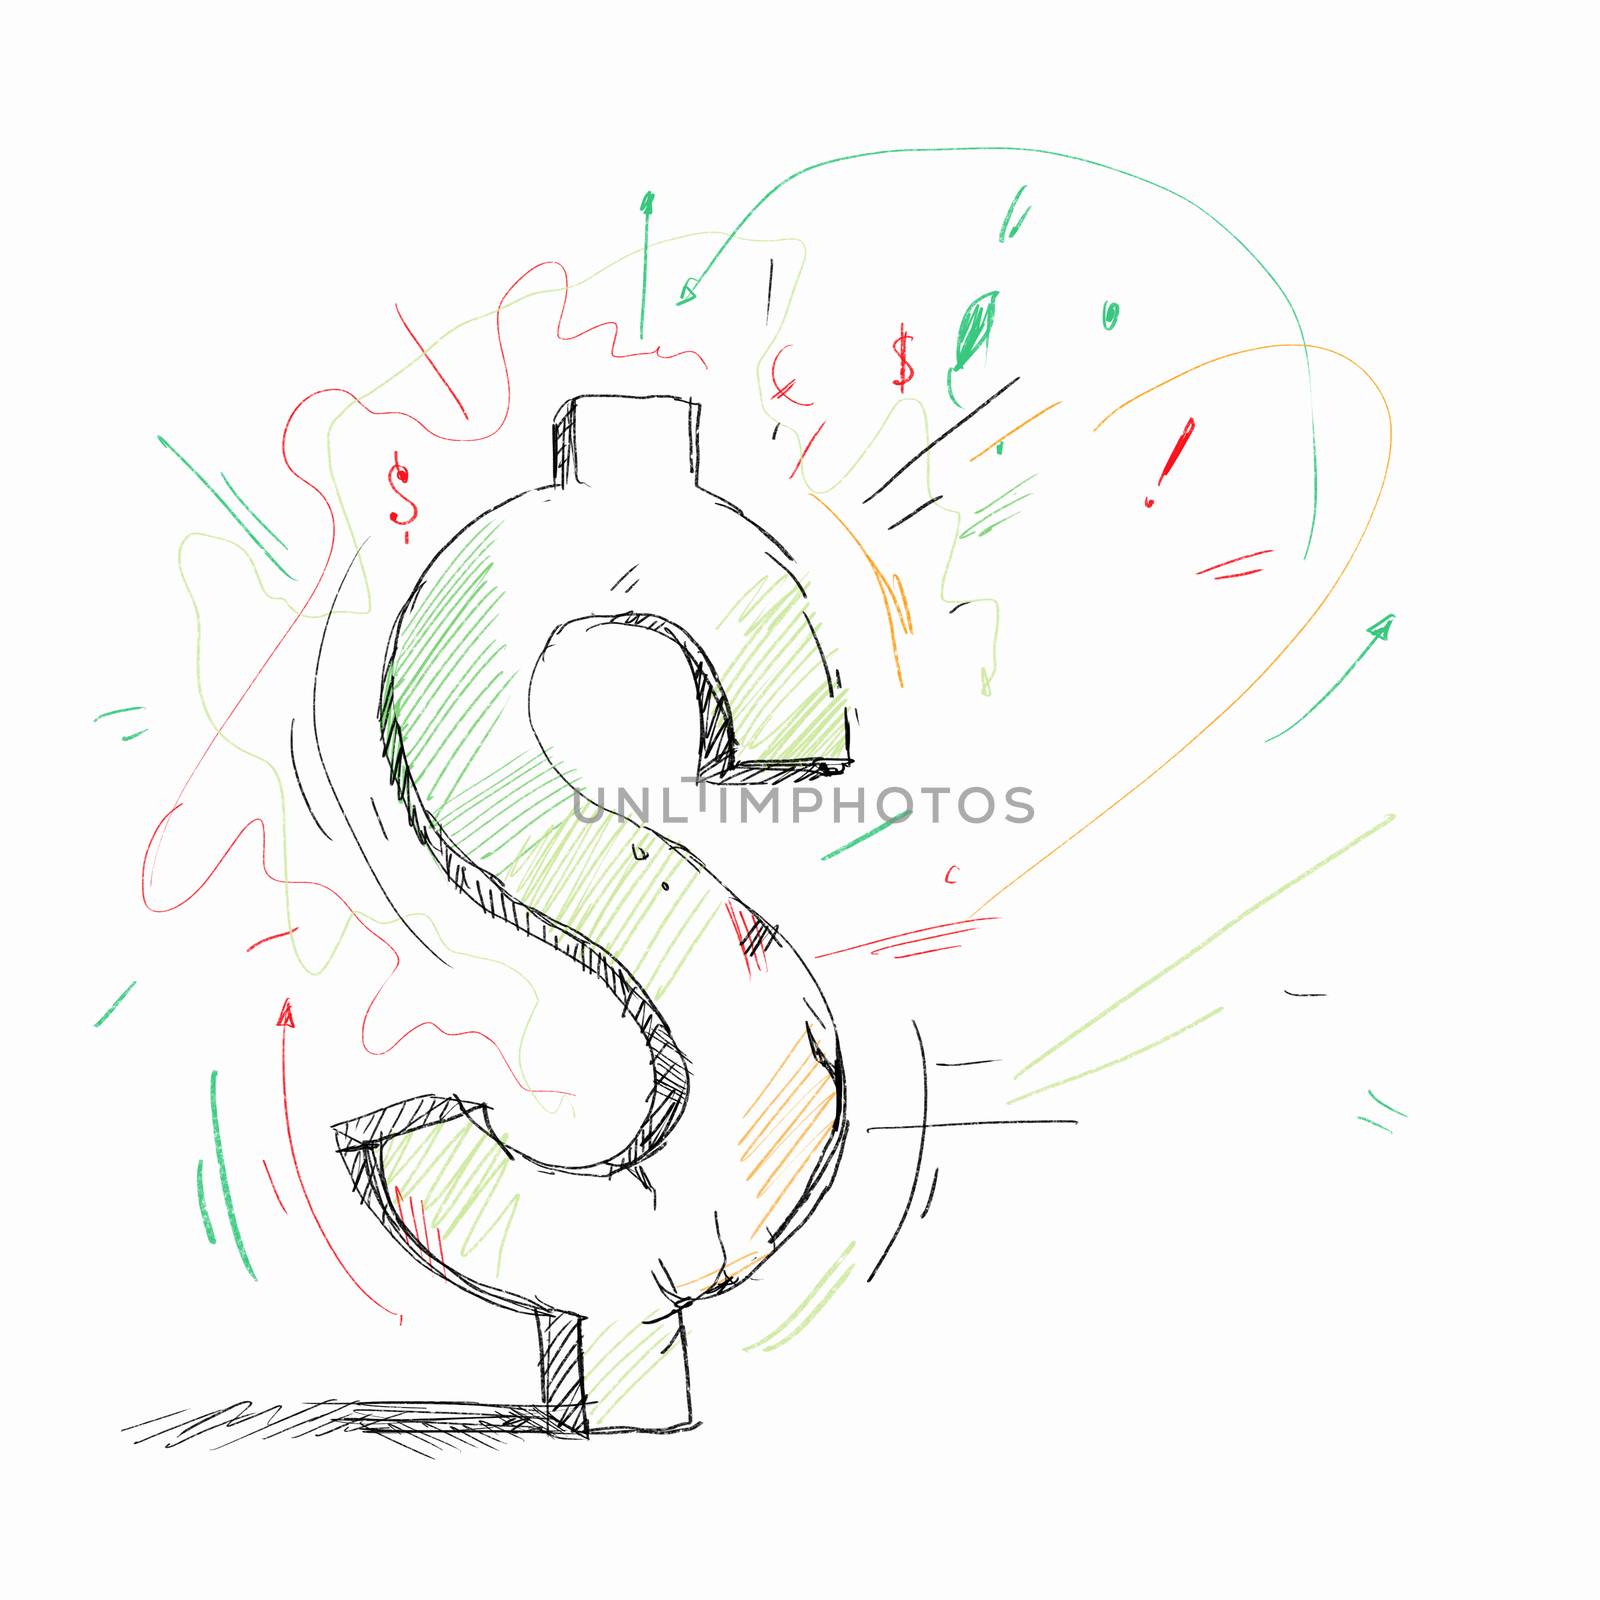 Drawn dollar sign against white background. Money concept